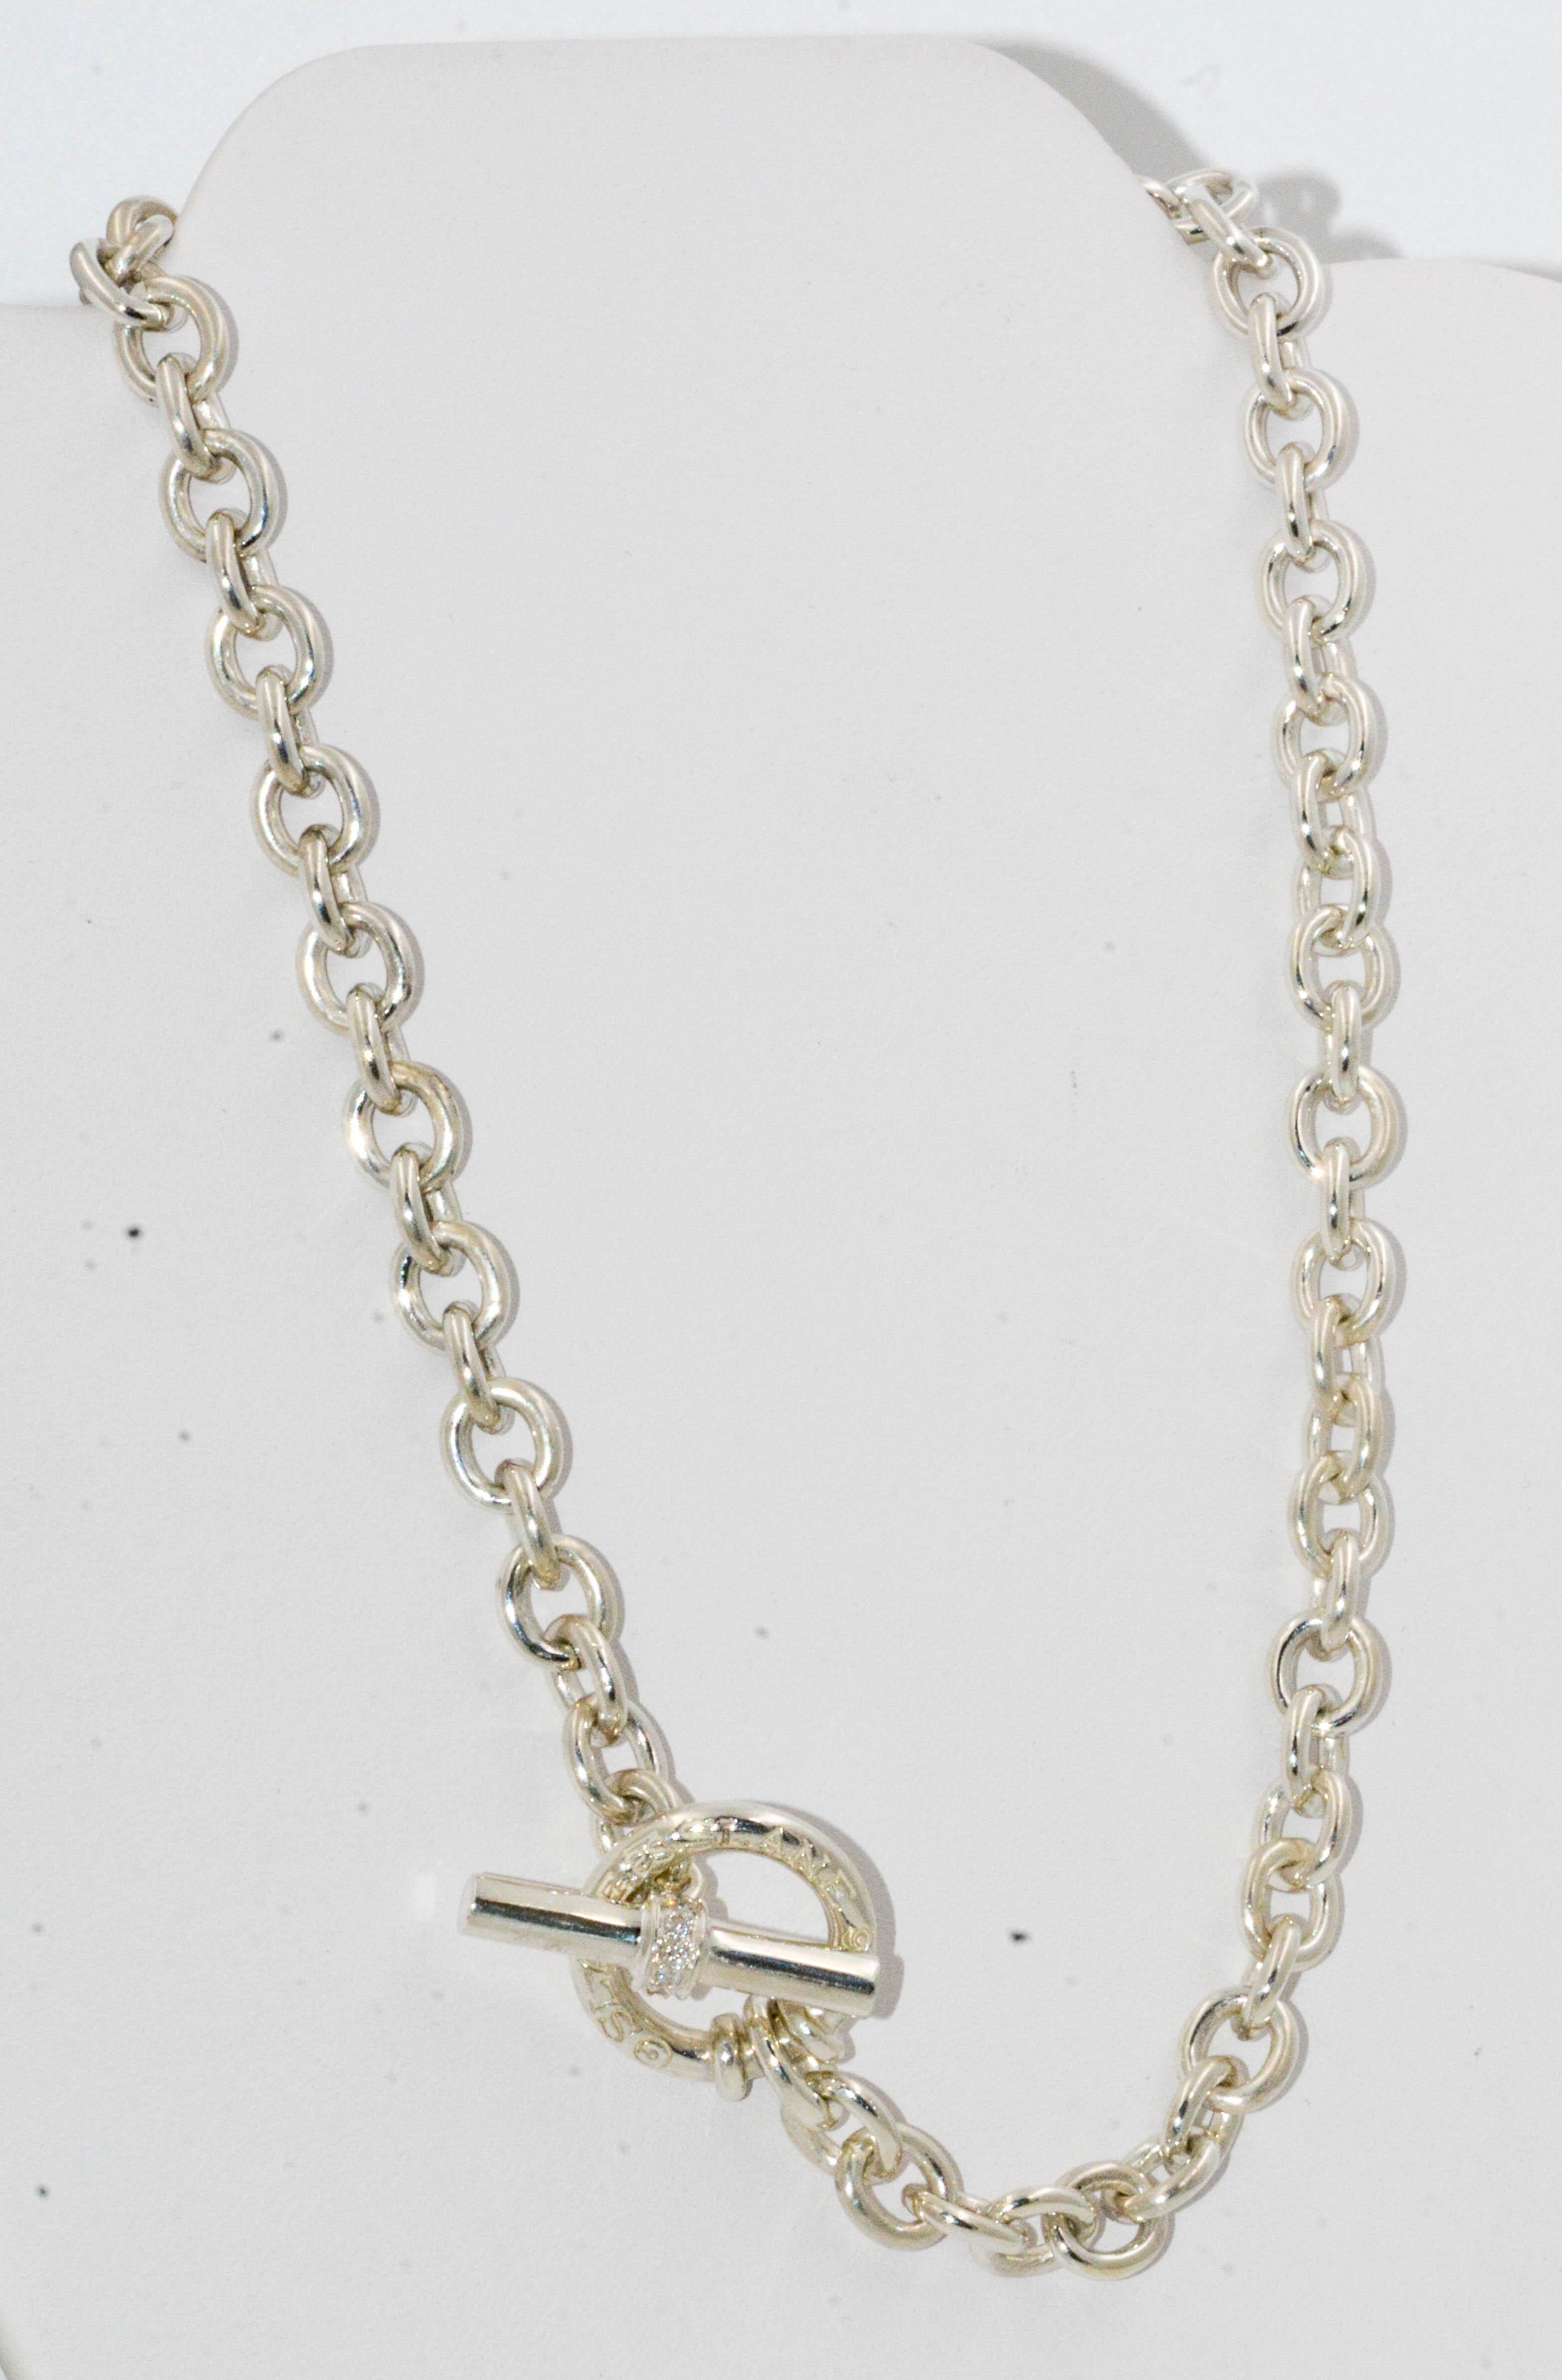 Modern Scott Slane Link Chain with Diamond Toggle Clasp